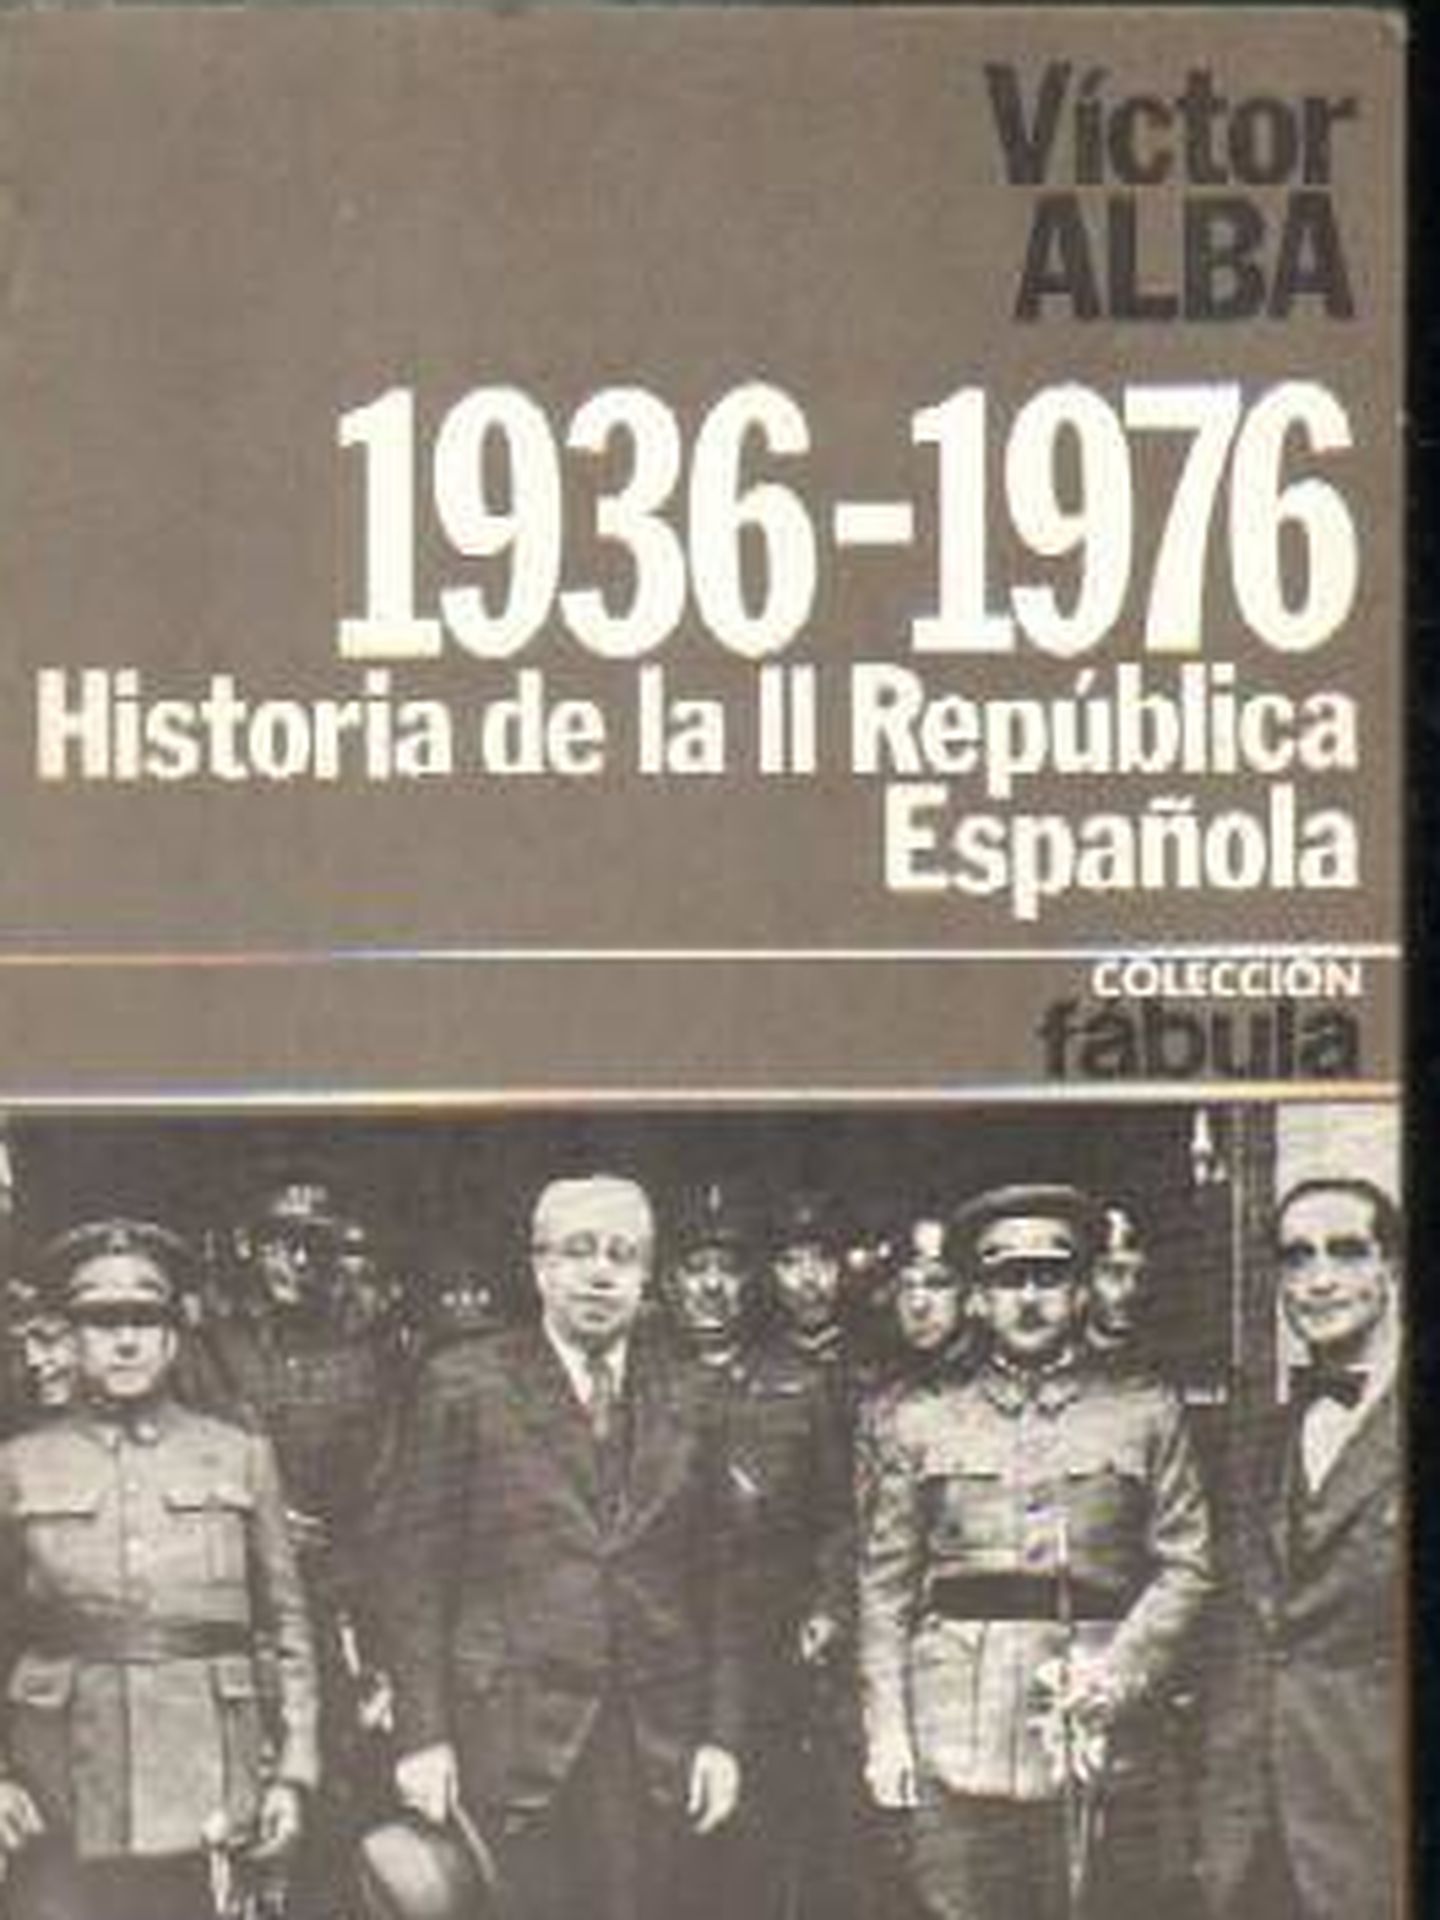 '1936-1976: historia de la II República Española'.